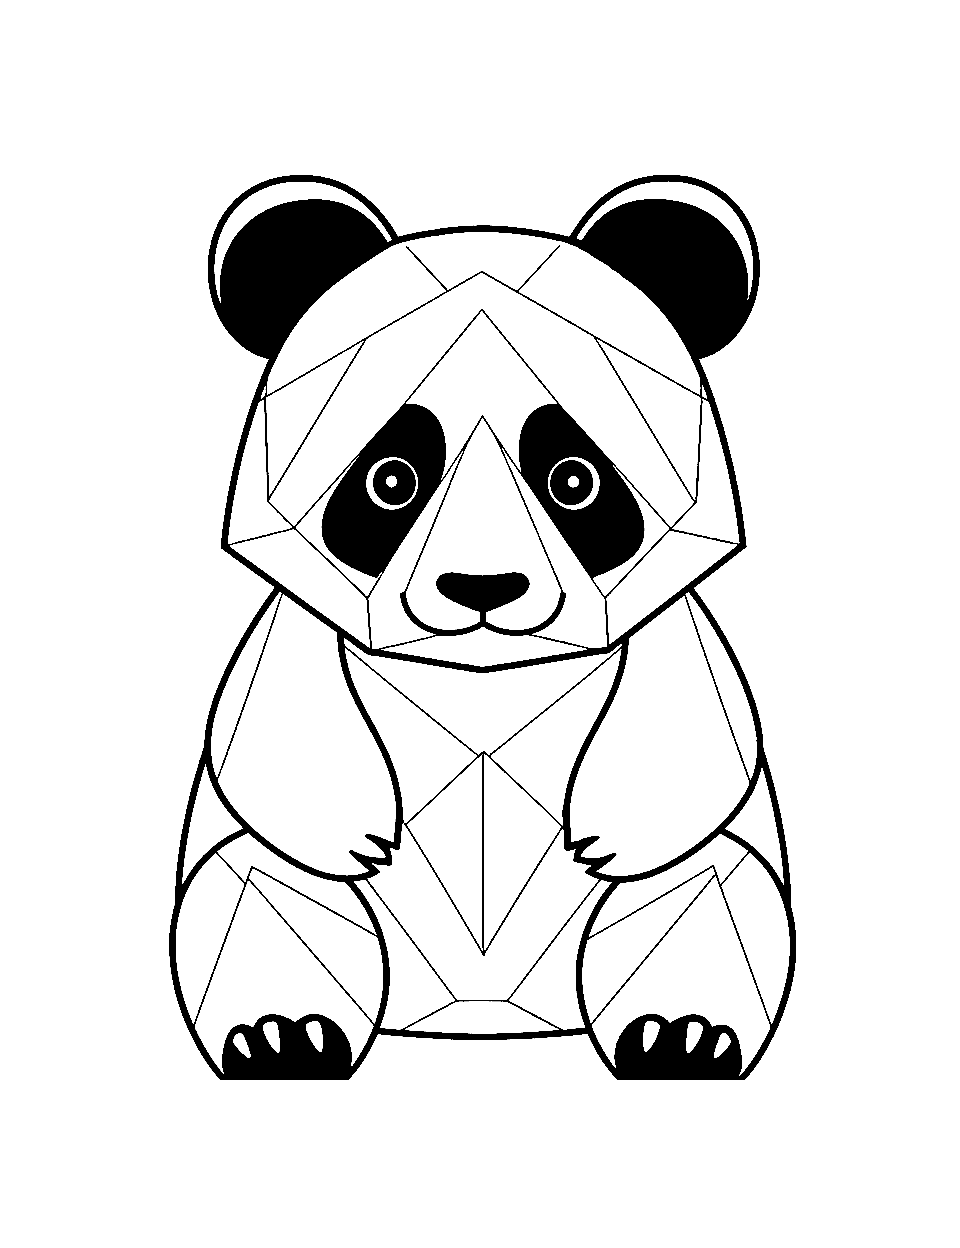 Simple Geometric Panda Coloring Page - A panda created with geometric shapes, providing a modern and minimalist design.